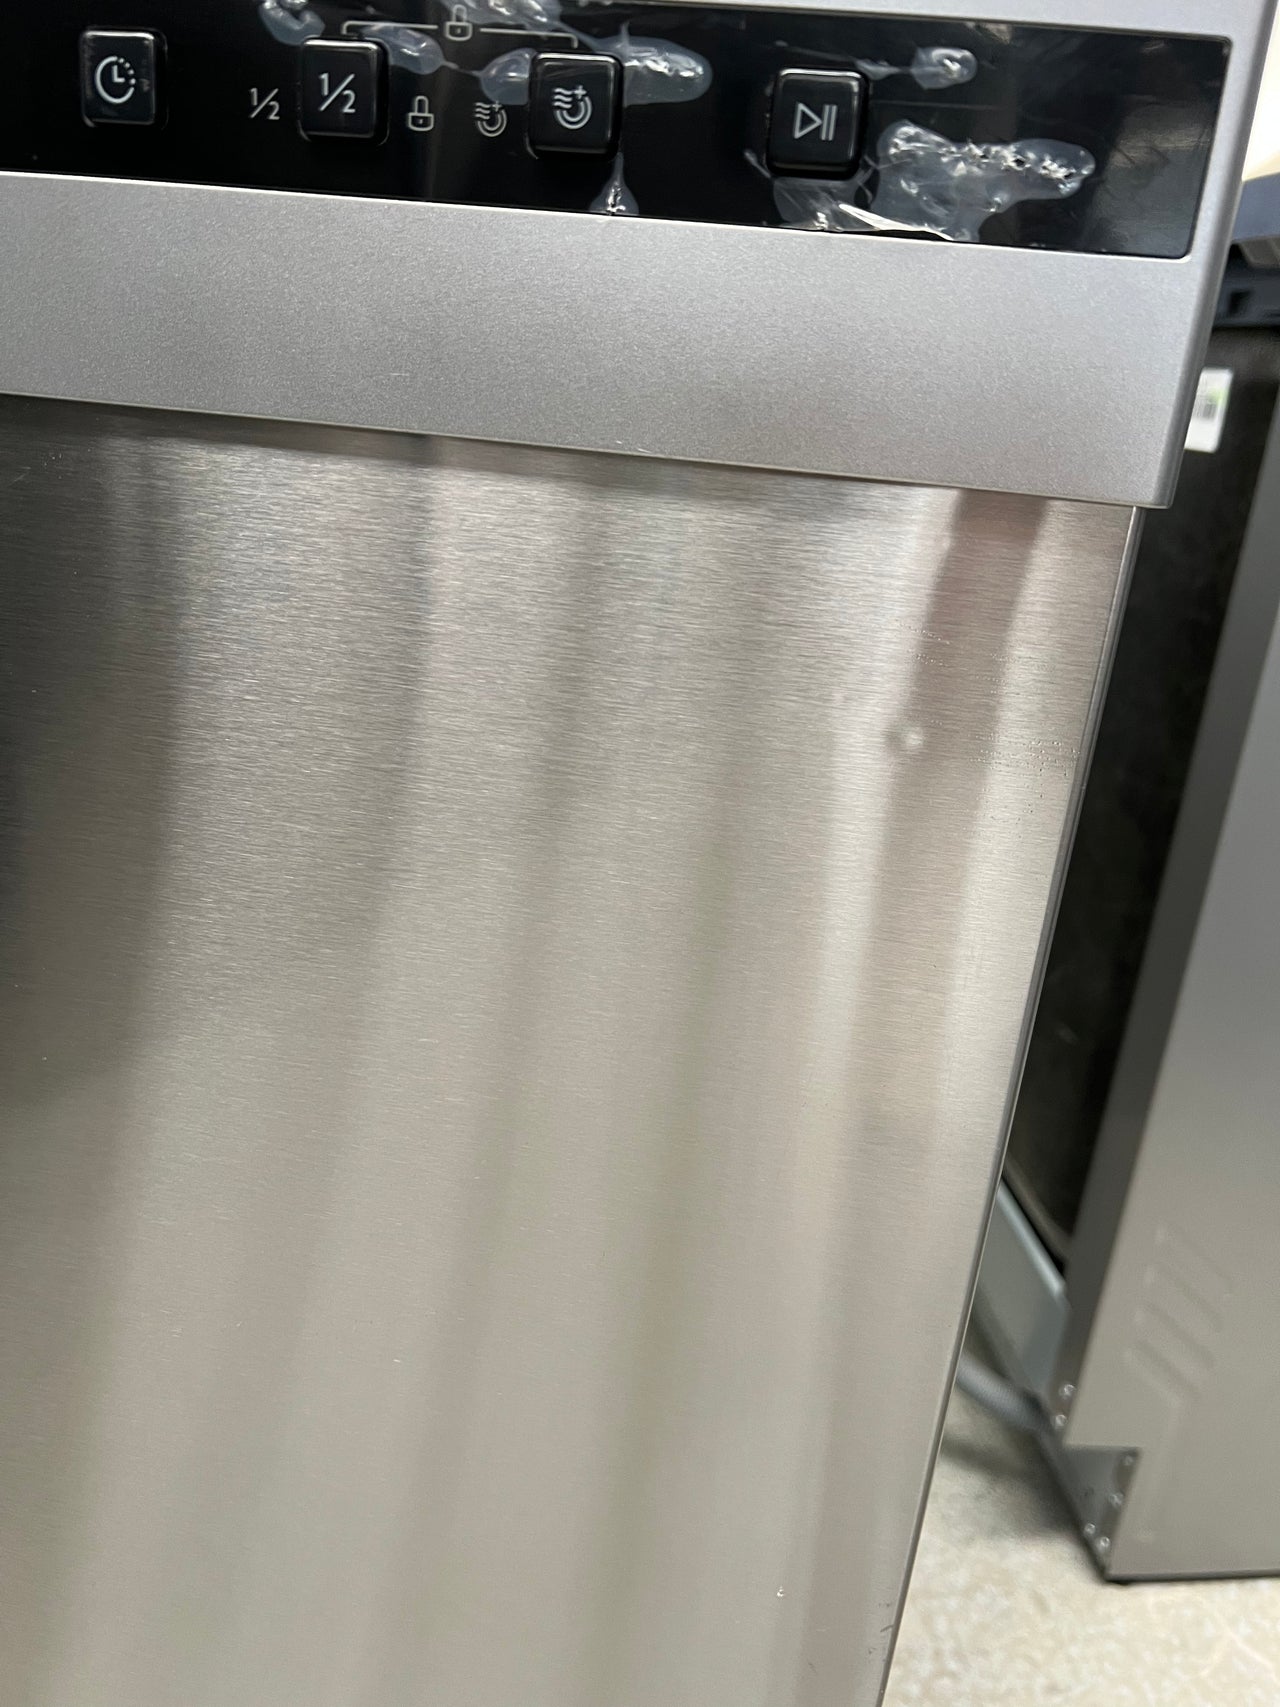 Factory second DeLonghi 60cm Freestanding Dishwasher DEDW6112S - Second Hand Appliances Geebung